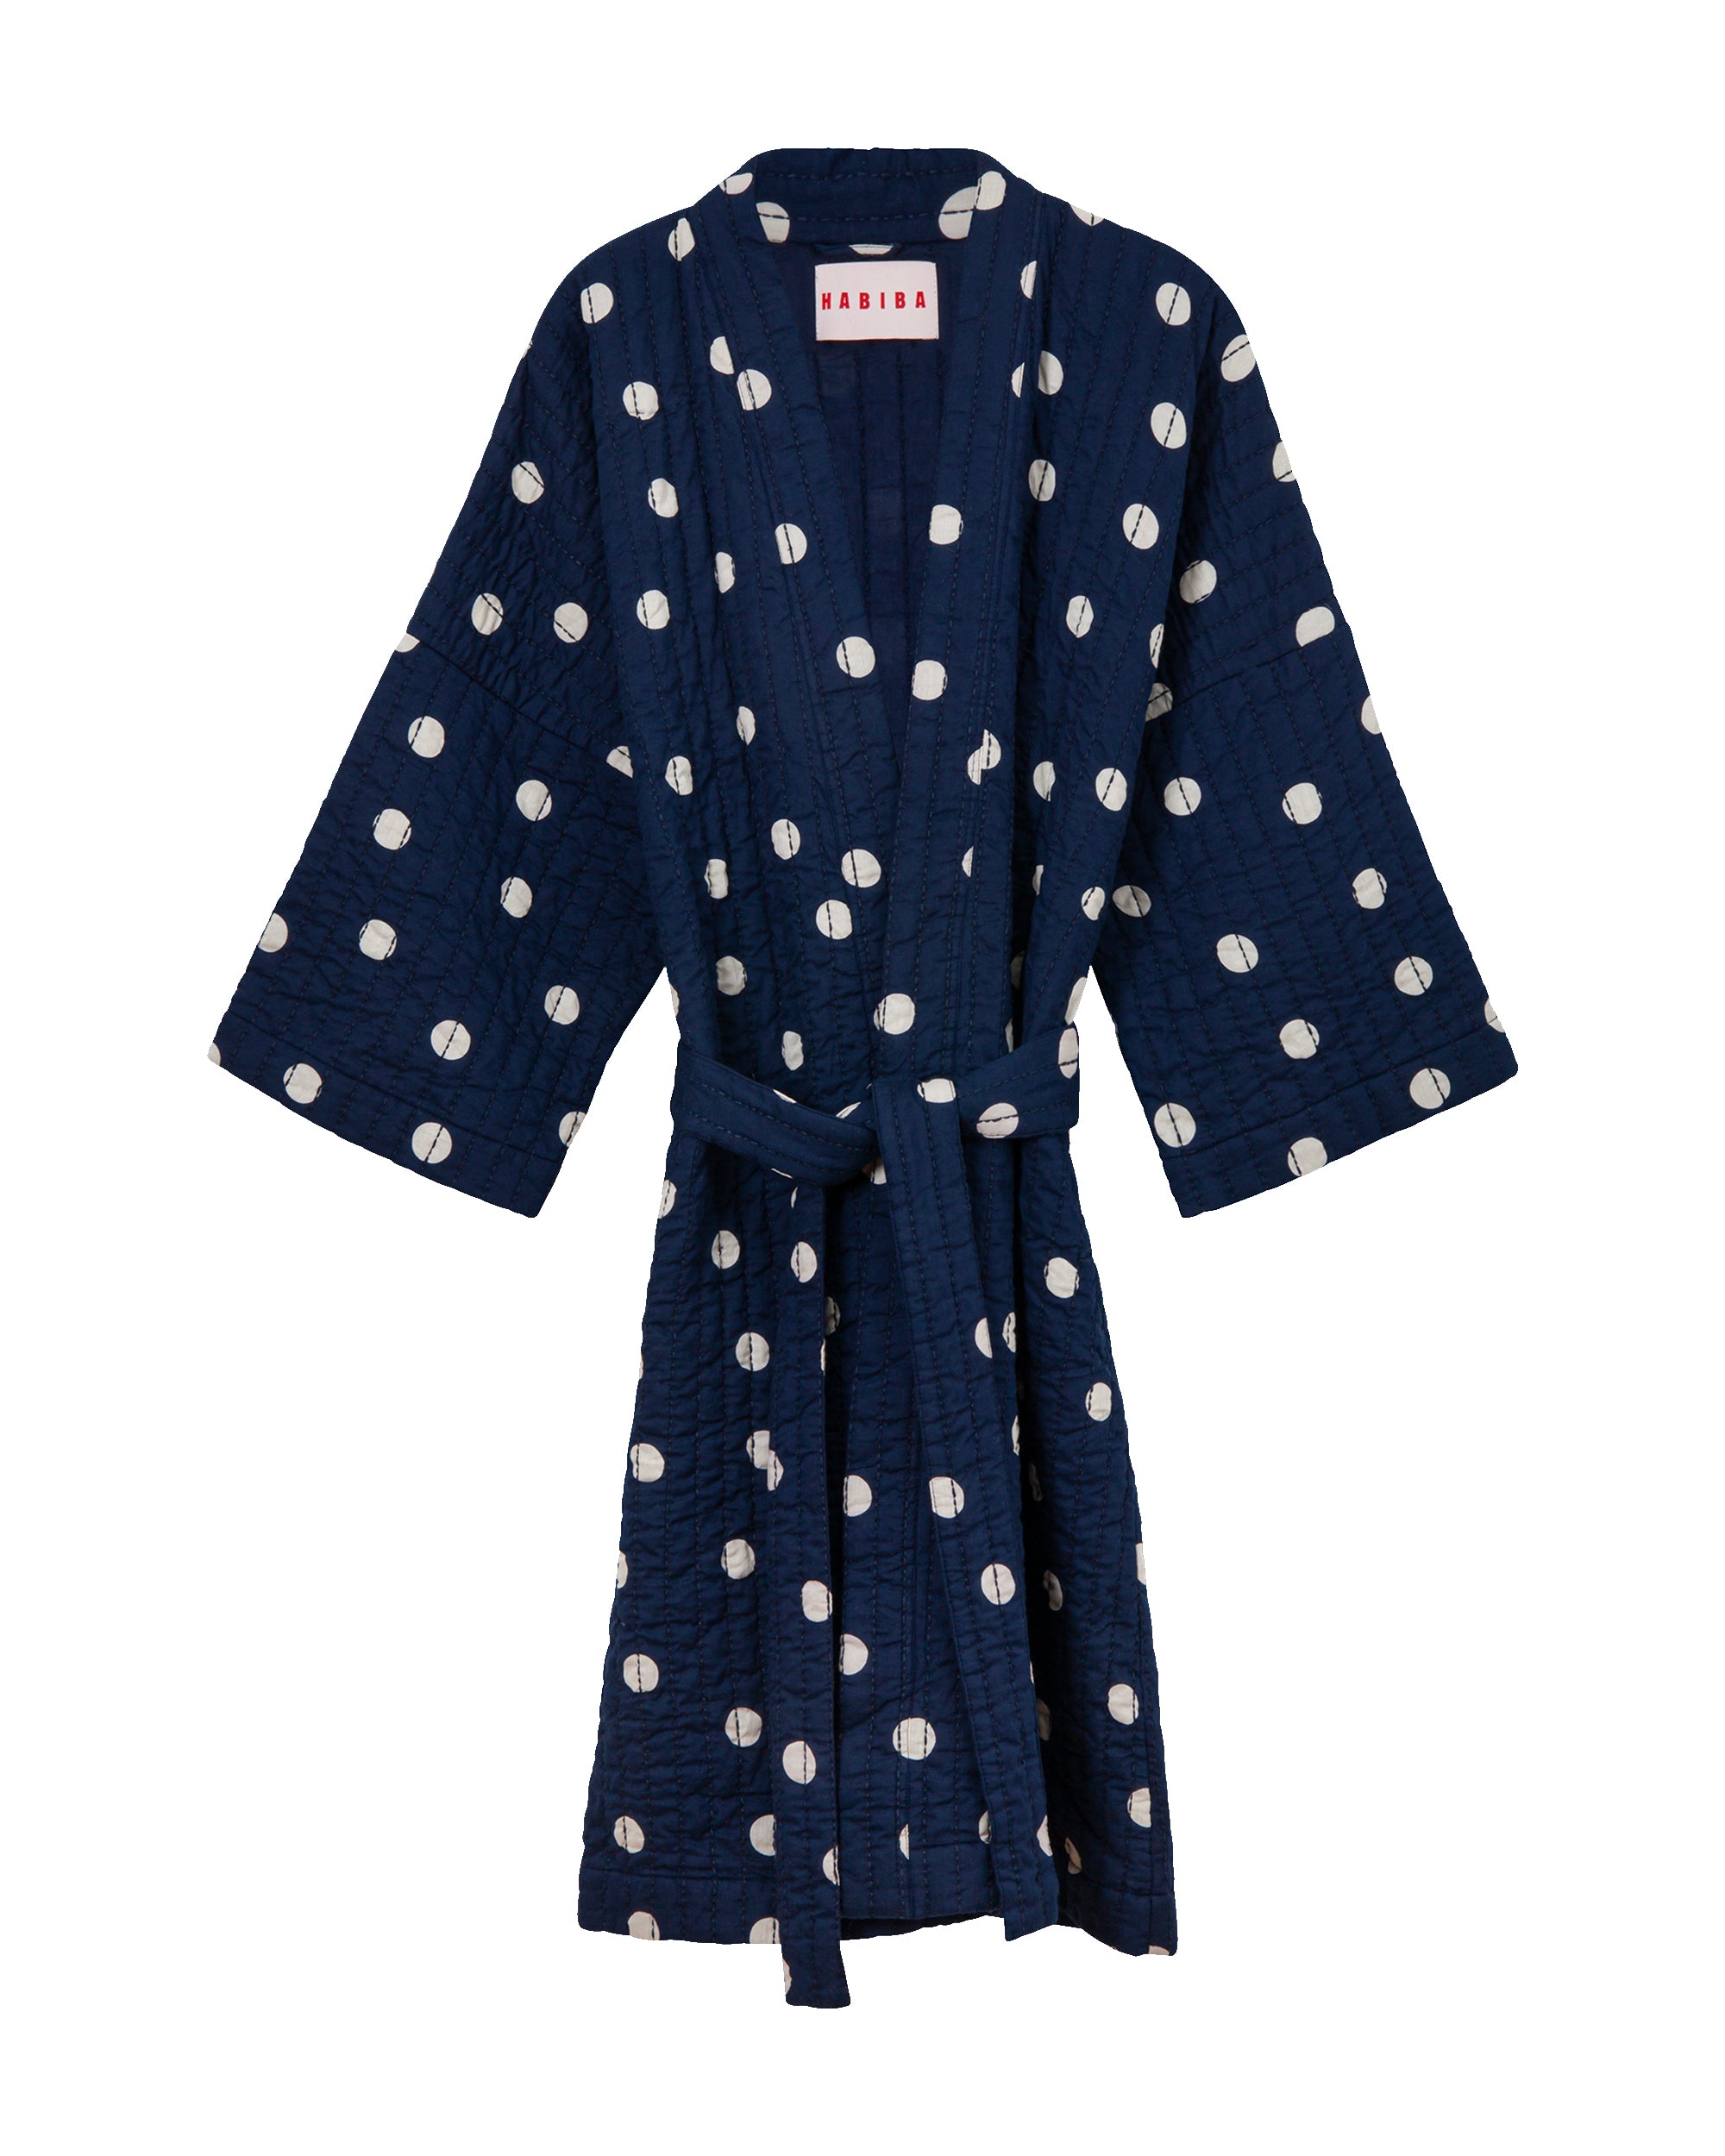 HABIBA MILLA QUILTED KIMONO Kimono NAVY